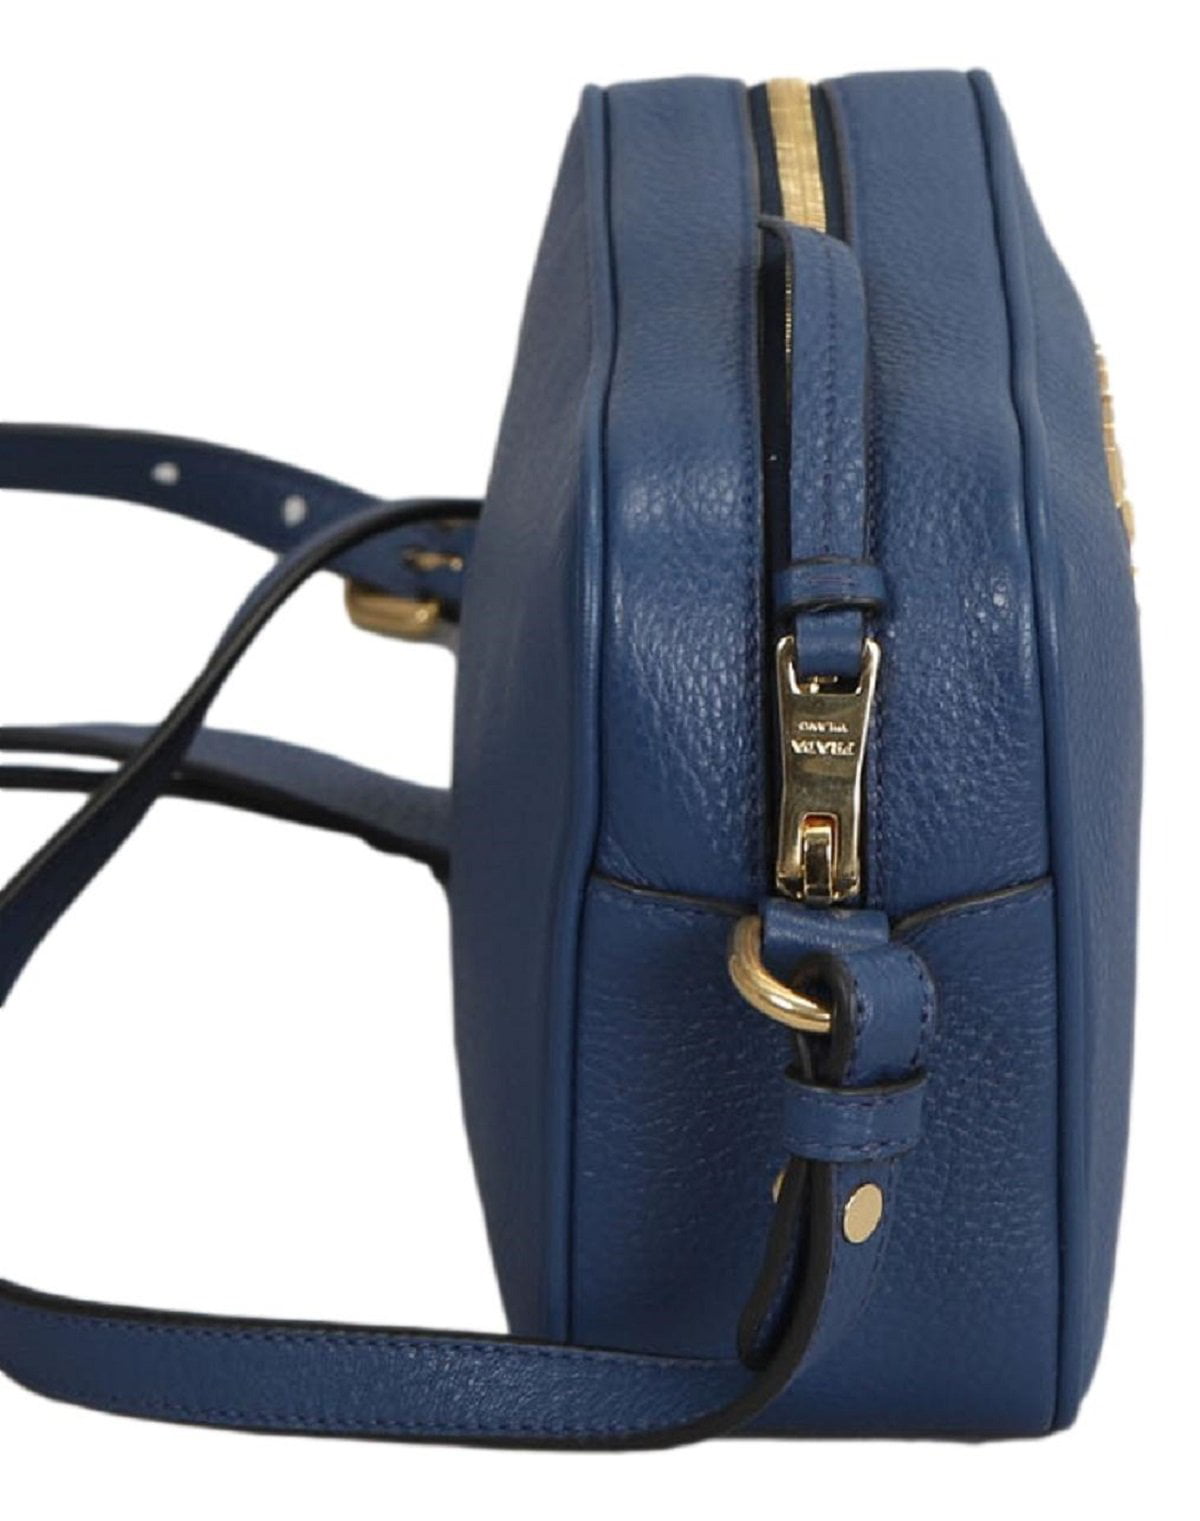 Kate Spade Royal Blue Pebbled Leather Handbag Crossbody Bag Purse - $65 -  From Rebecca